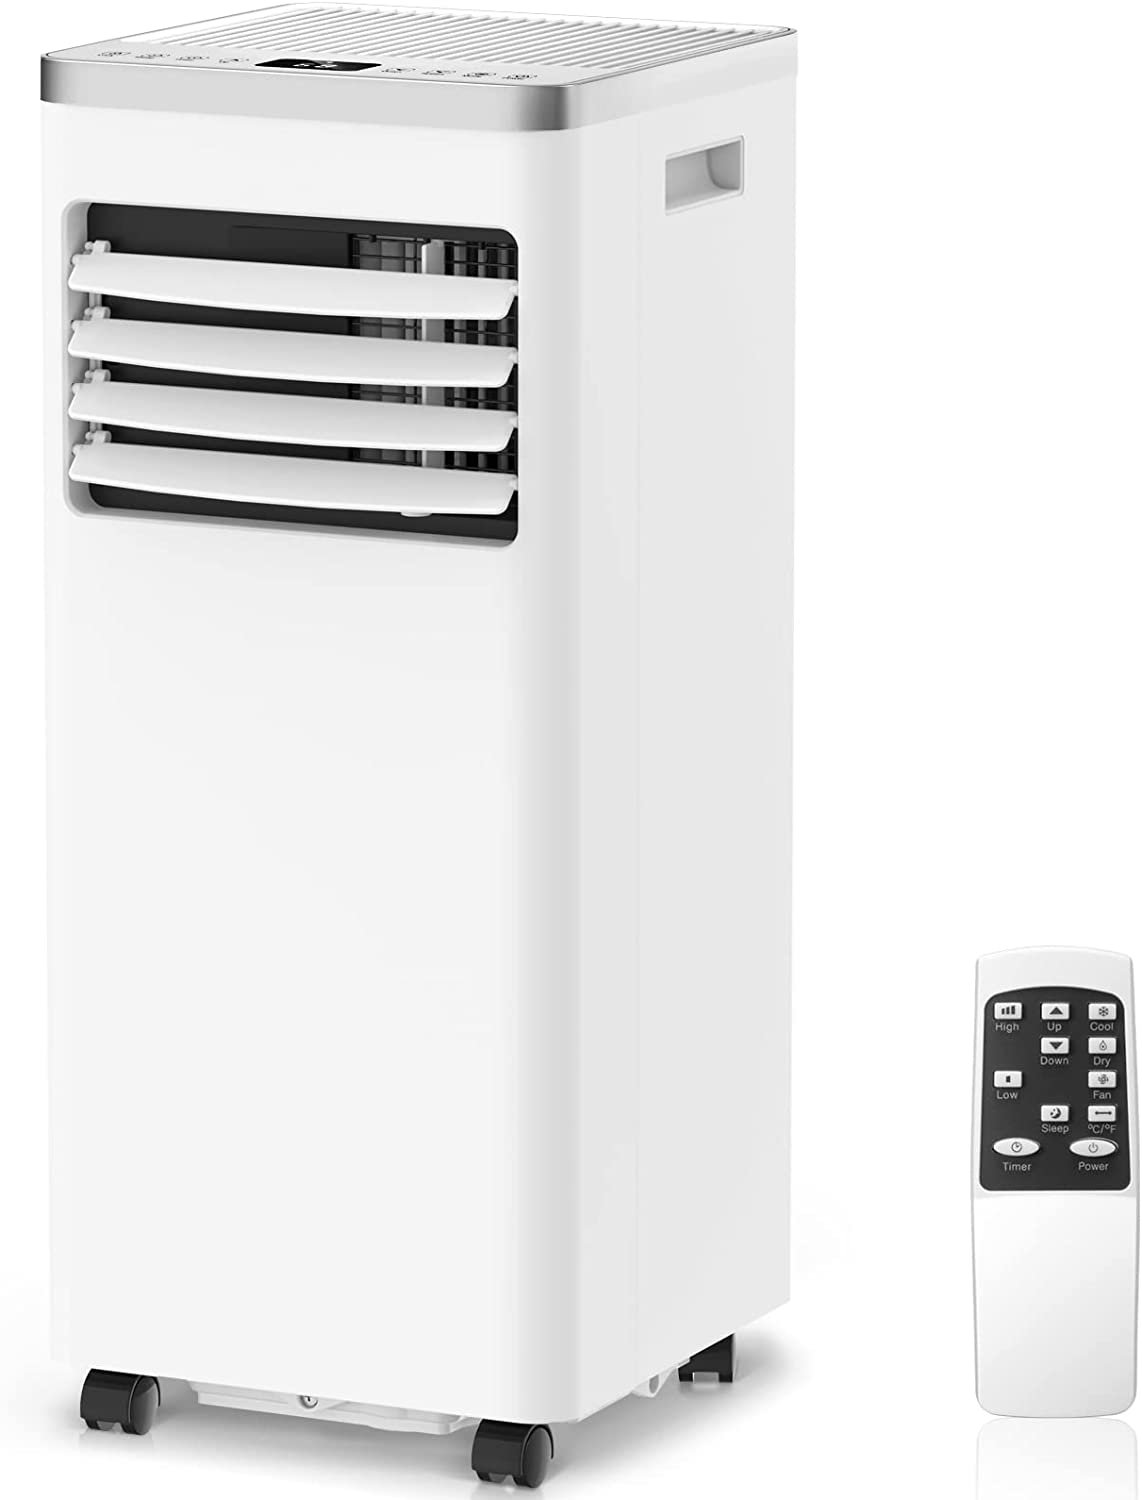 Black+decker 8,000 BTU Portable Air Conditioner with Remote Control, White